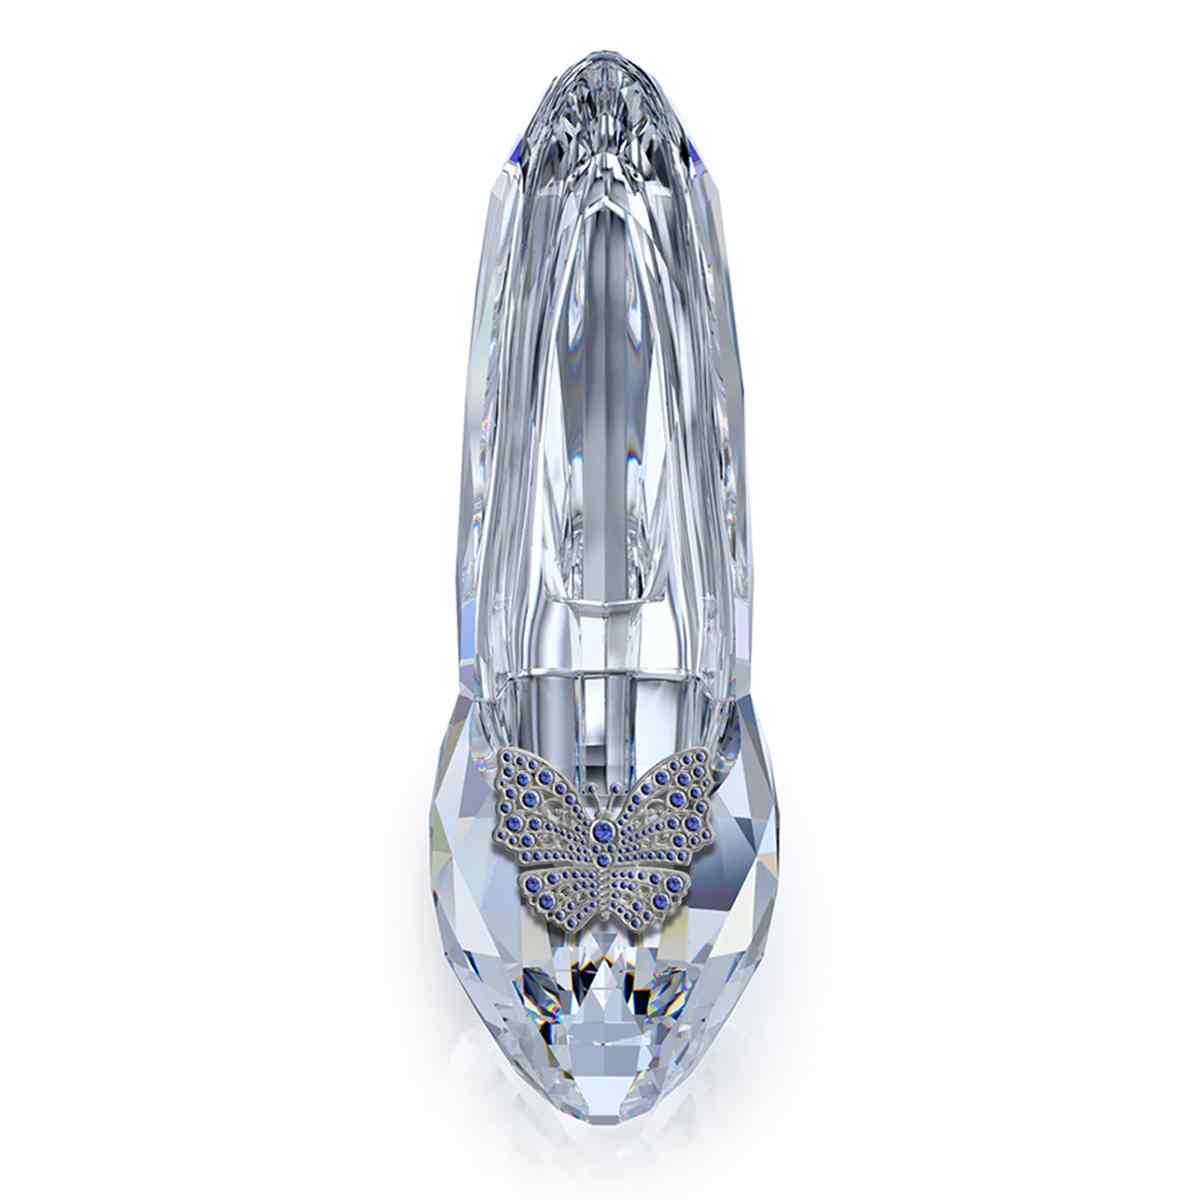 Italian crystal - buy Cinderella's shoe 600040060 on fromitalyonline.com